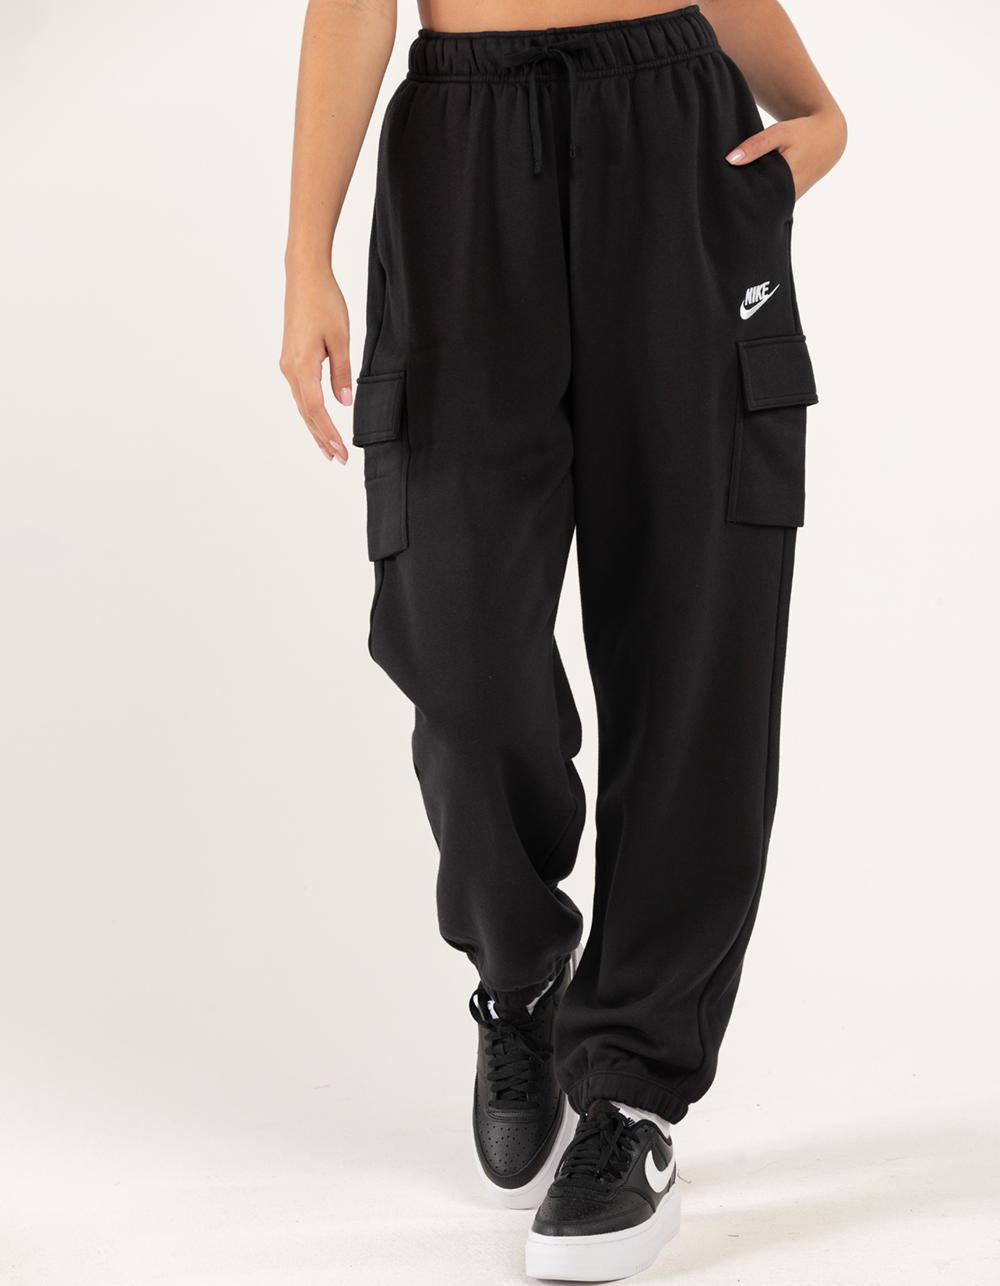 Nike Womens Sportswear Essential Track Pants Grey XL